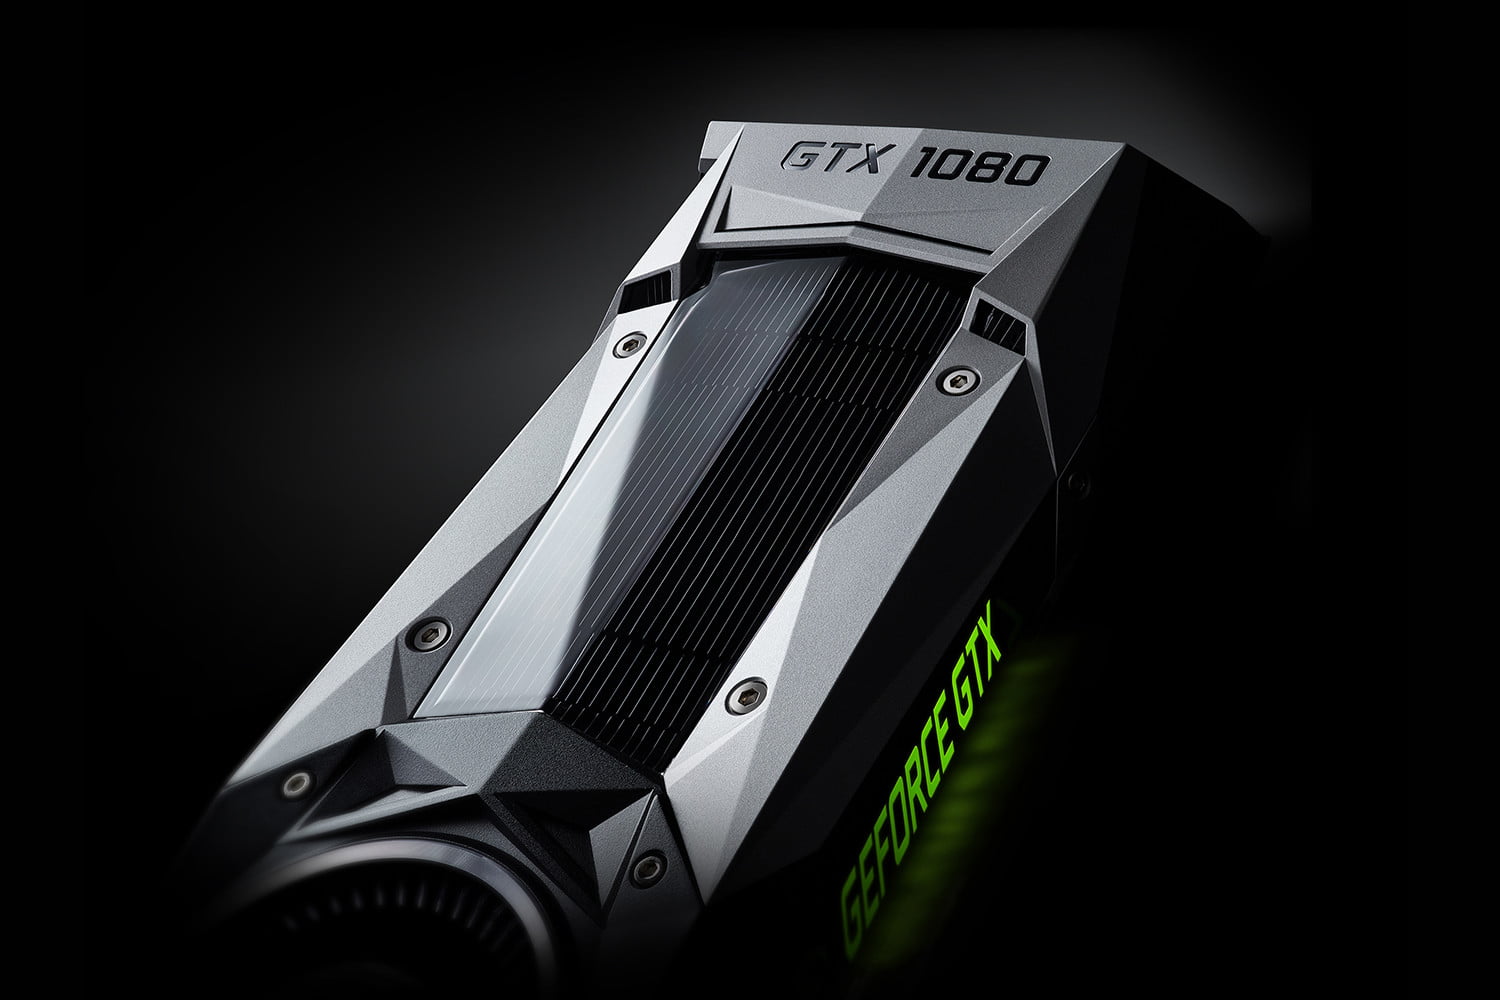 Nvidia GTX 1080 vs RTX 2070